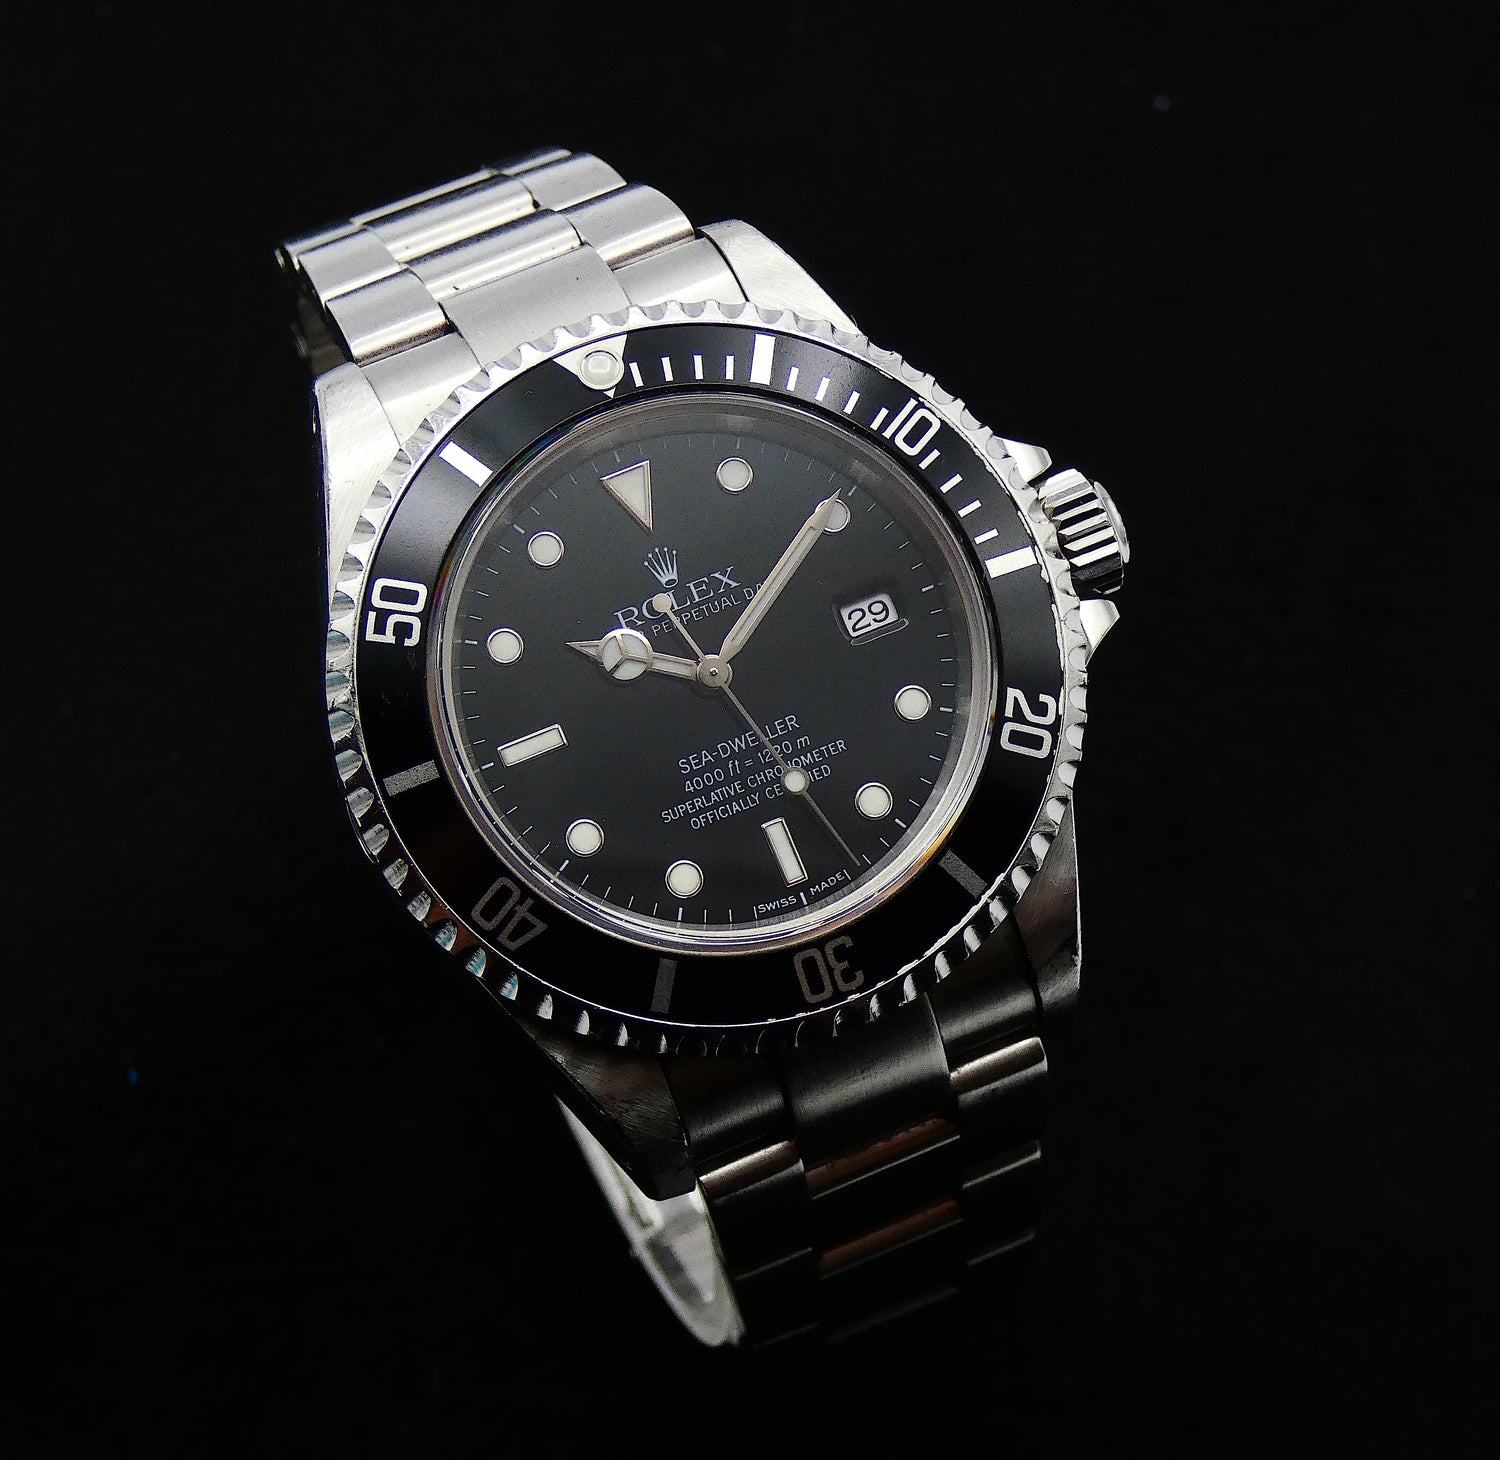 Rolex Sea-Dweller 4000 16600